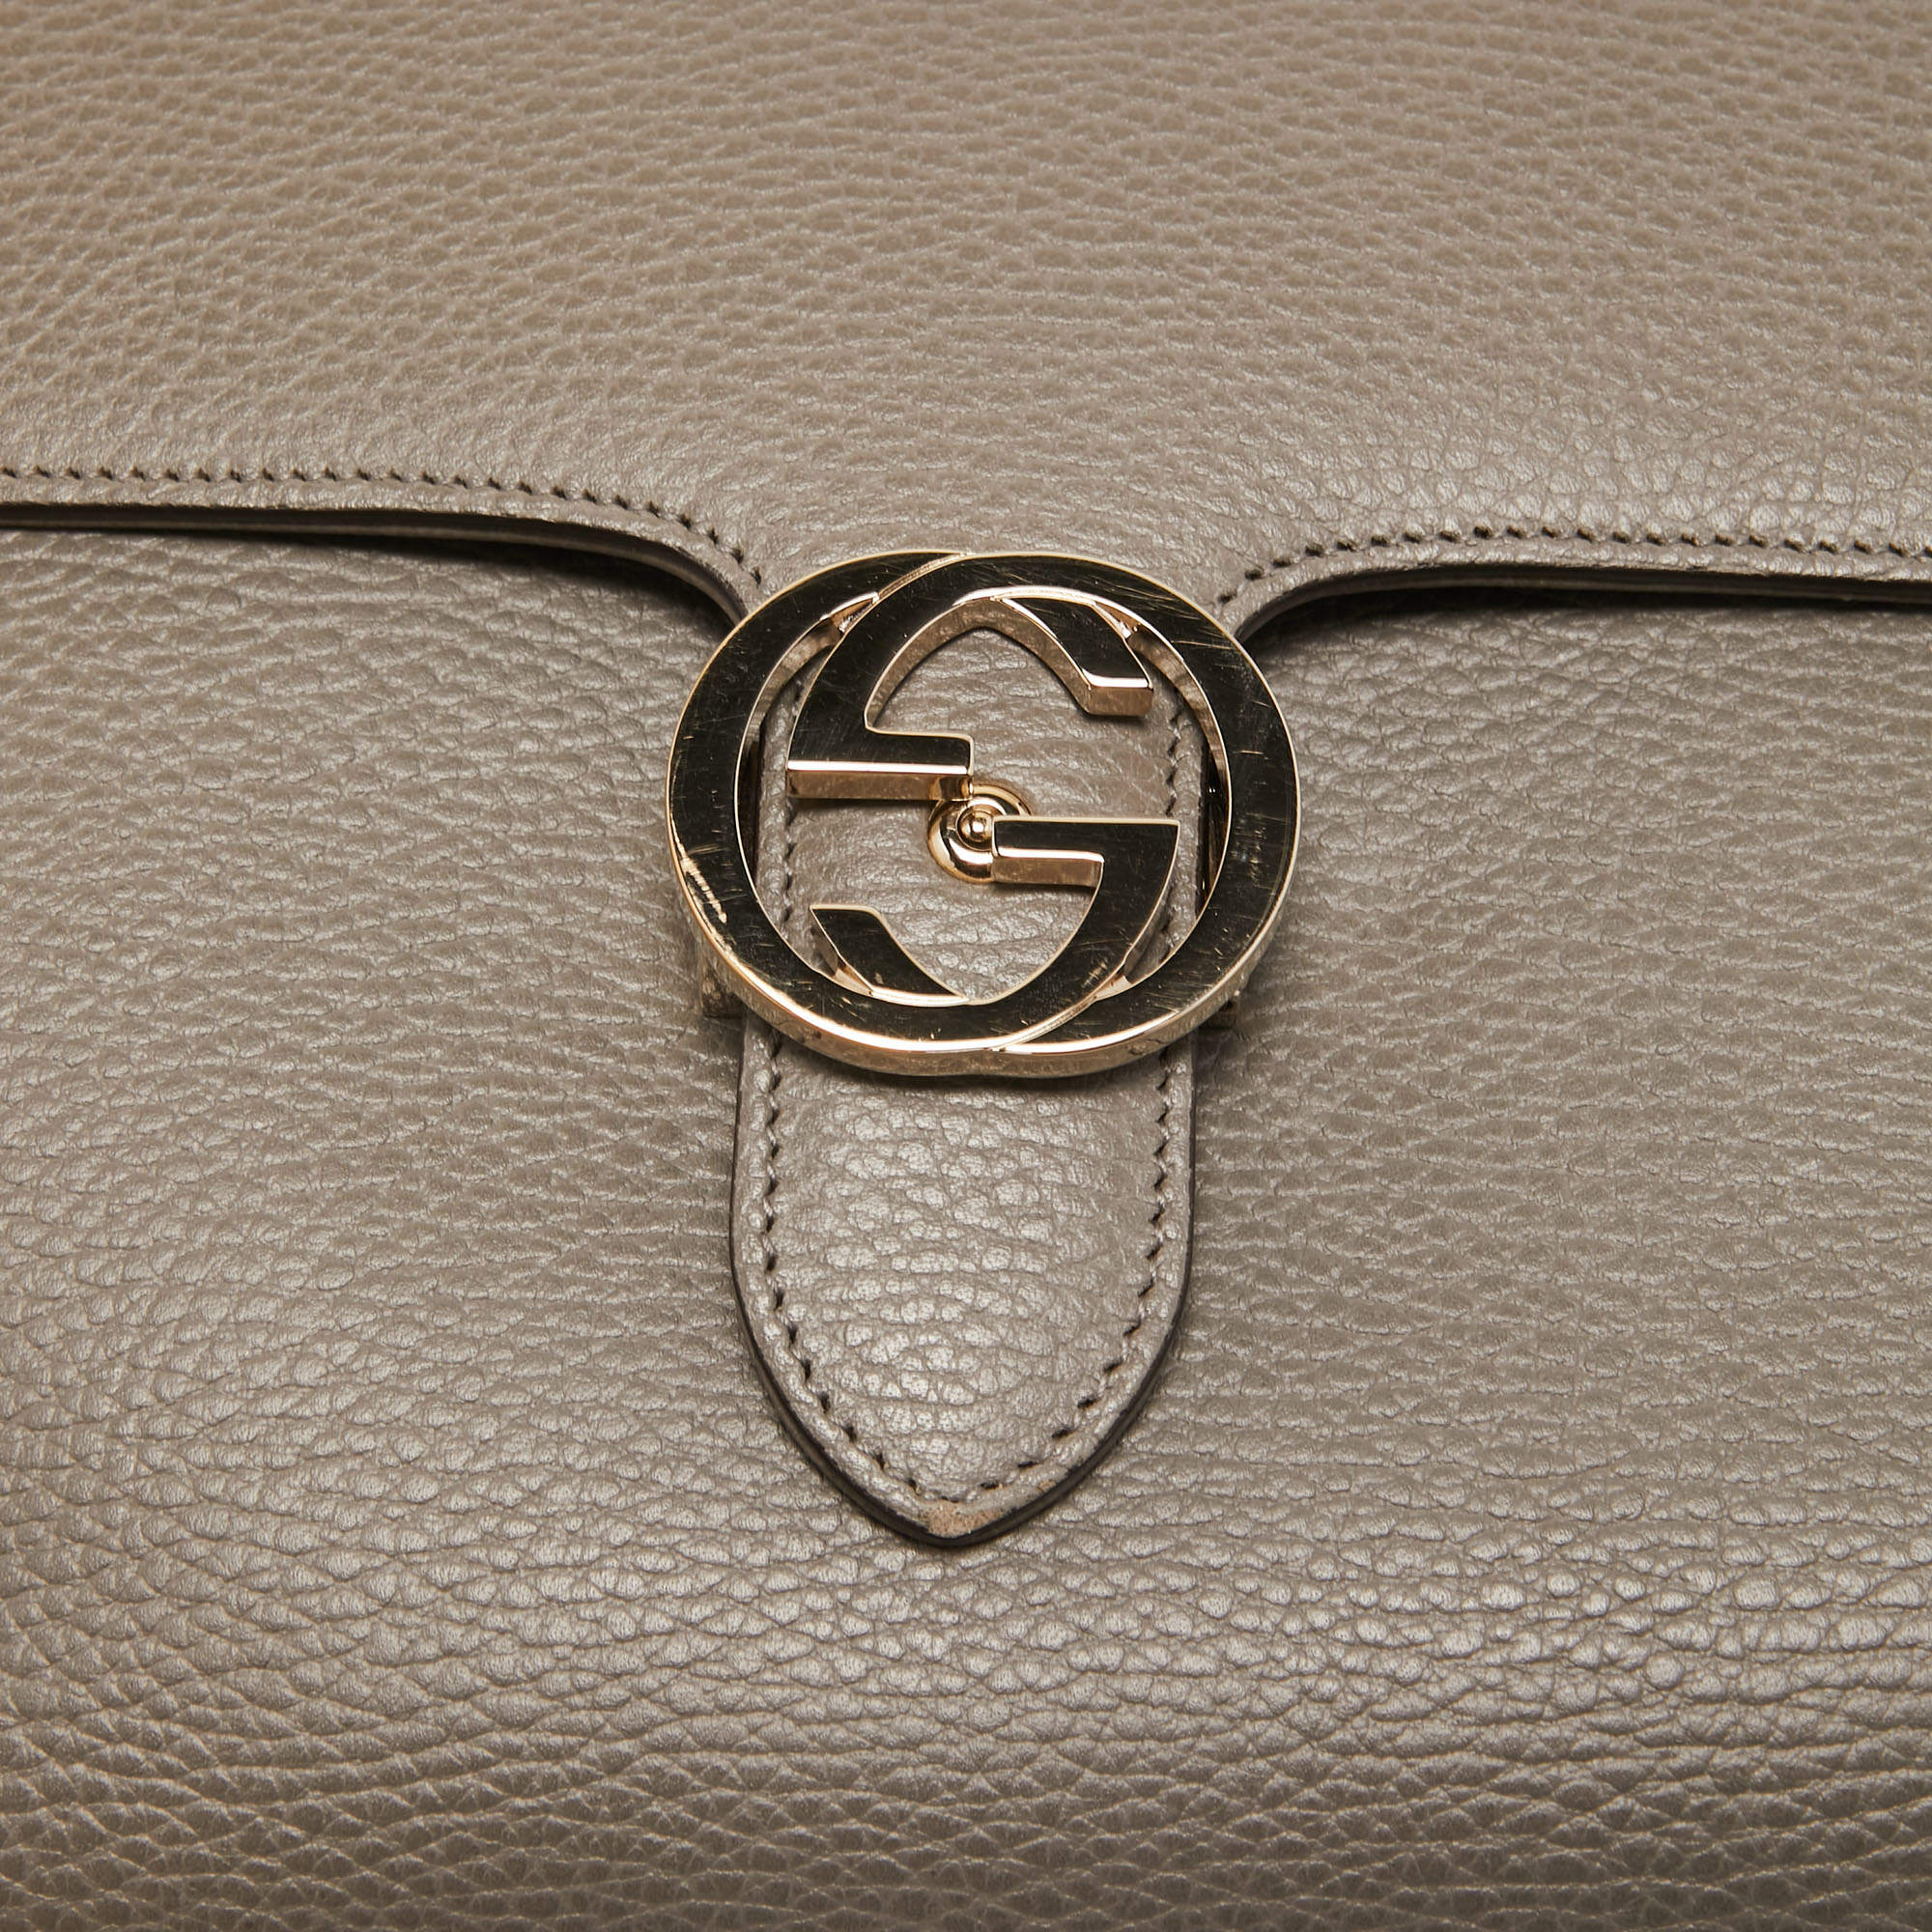 Gucci Medium Dollar Interlocking G Shoulder Bag - ShopStyle